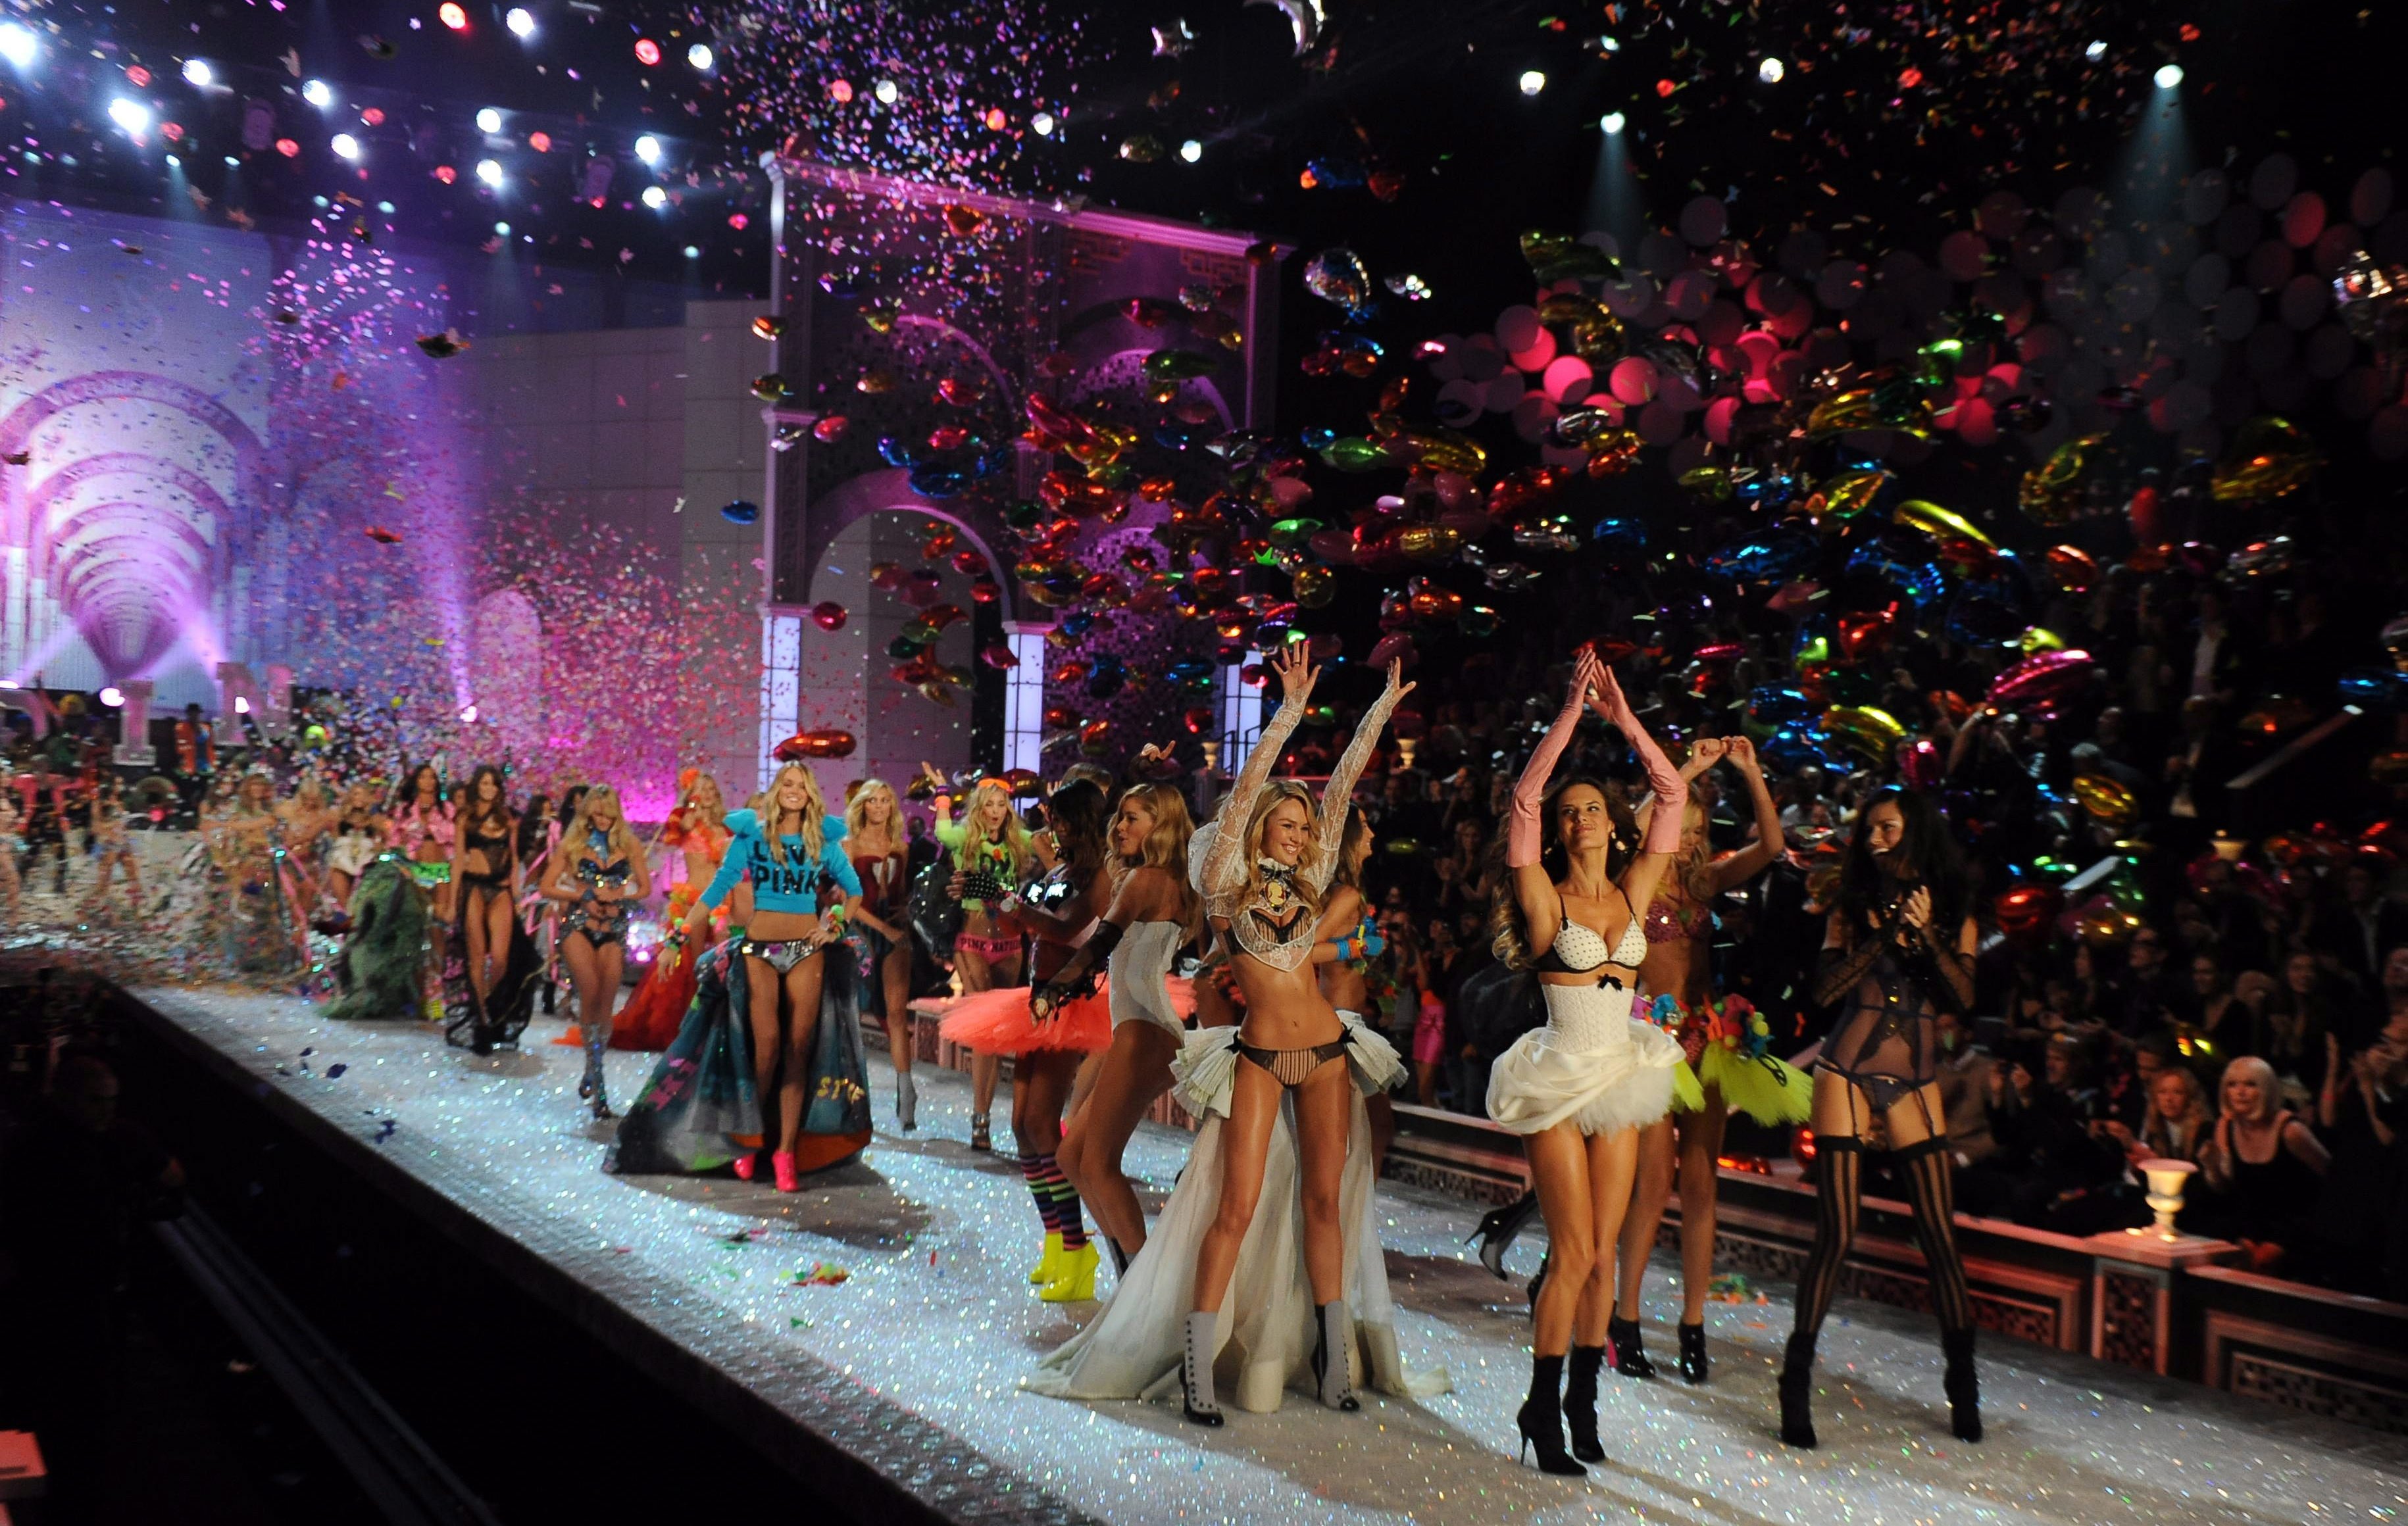 Victoria's Secret cancel·la la seva desfilada anual en ple #MeToo